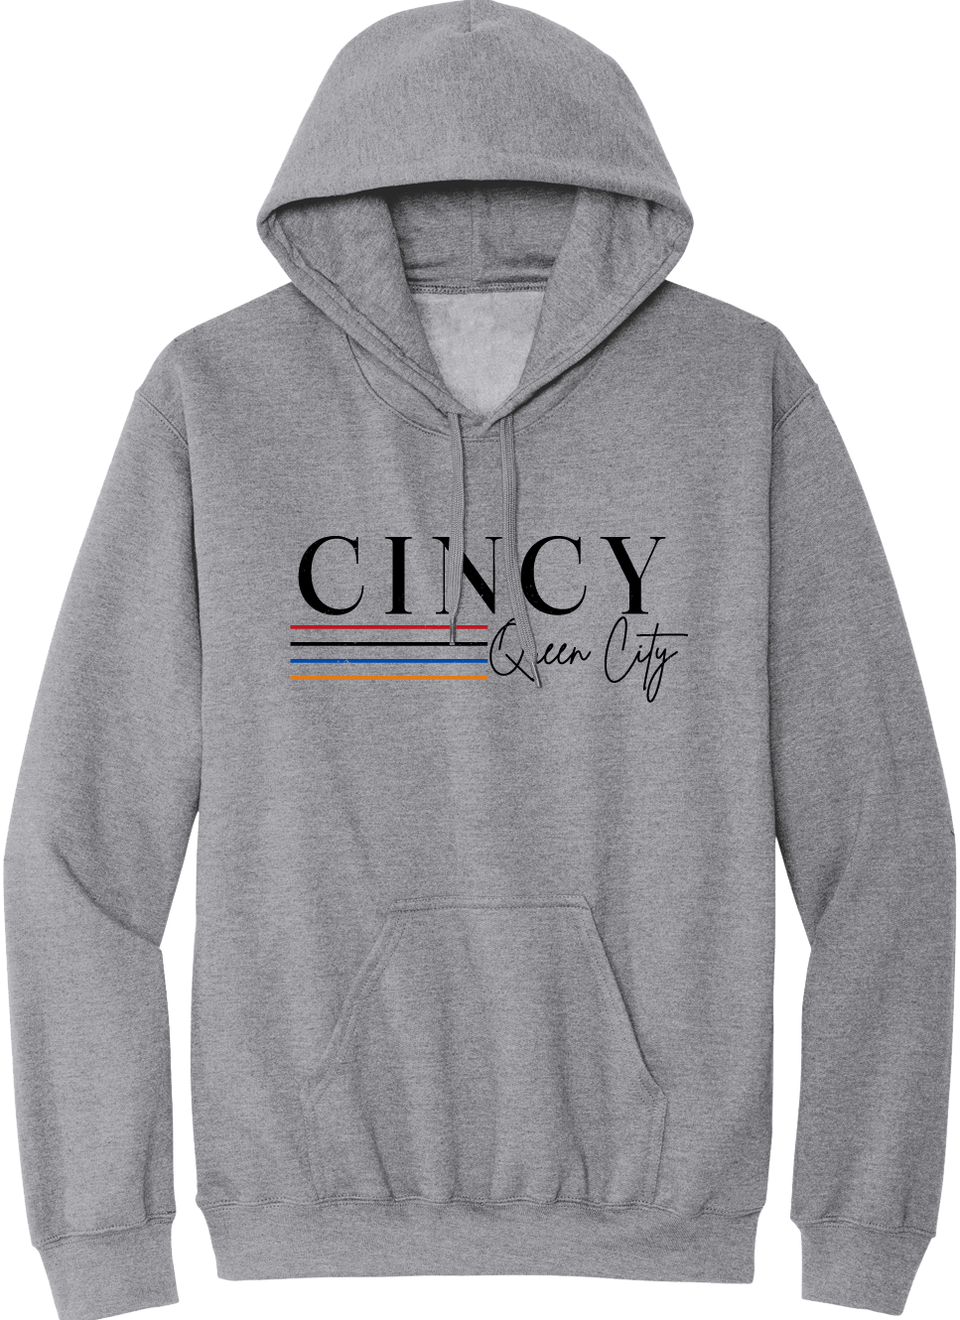 Cincy Queen City Young Entrepreneurs Hooded Sweatshirt Cincy Shirts